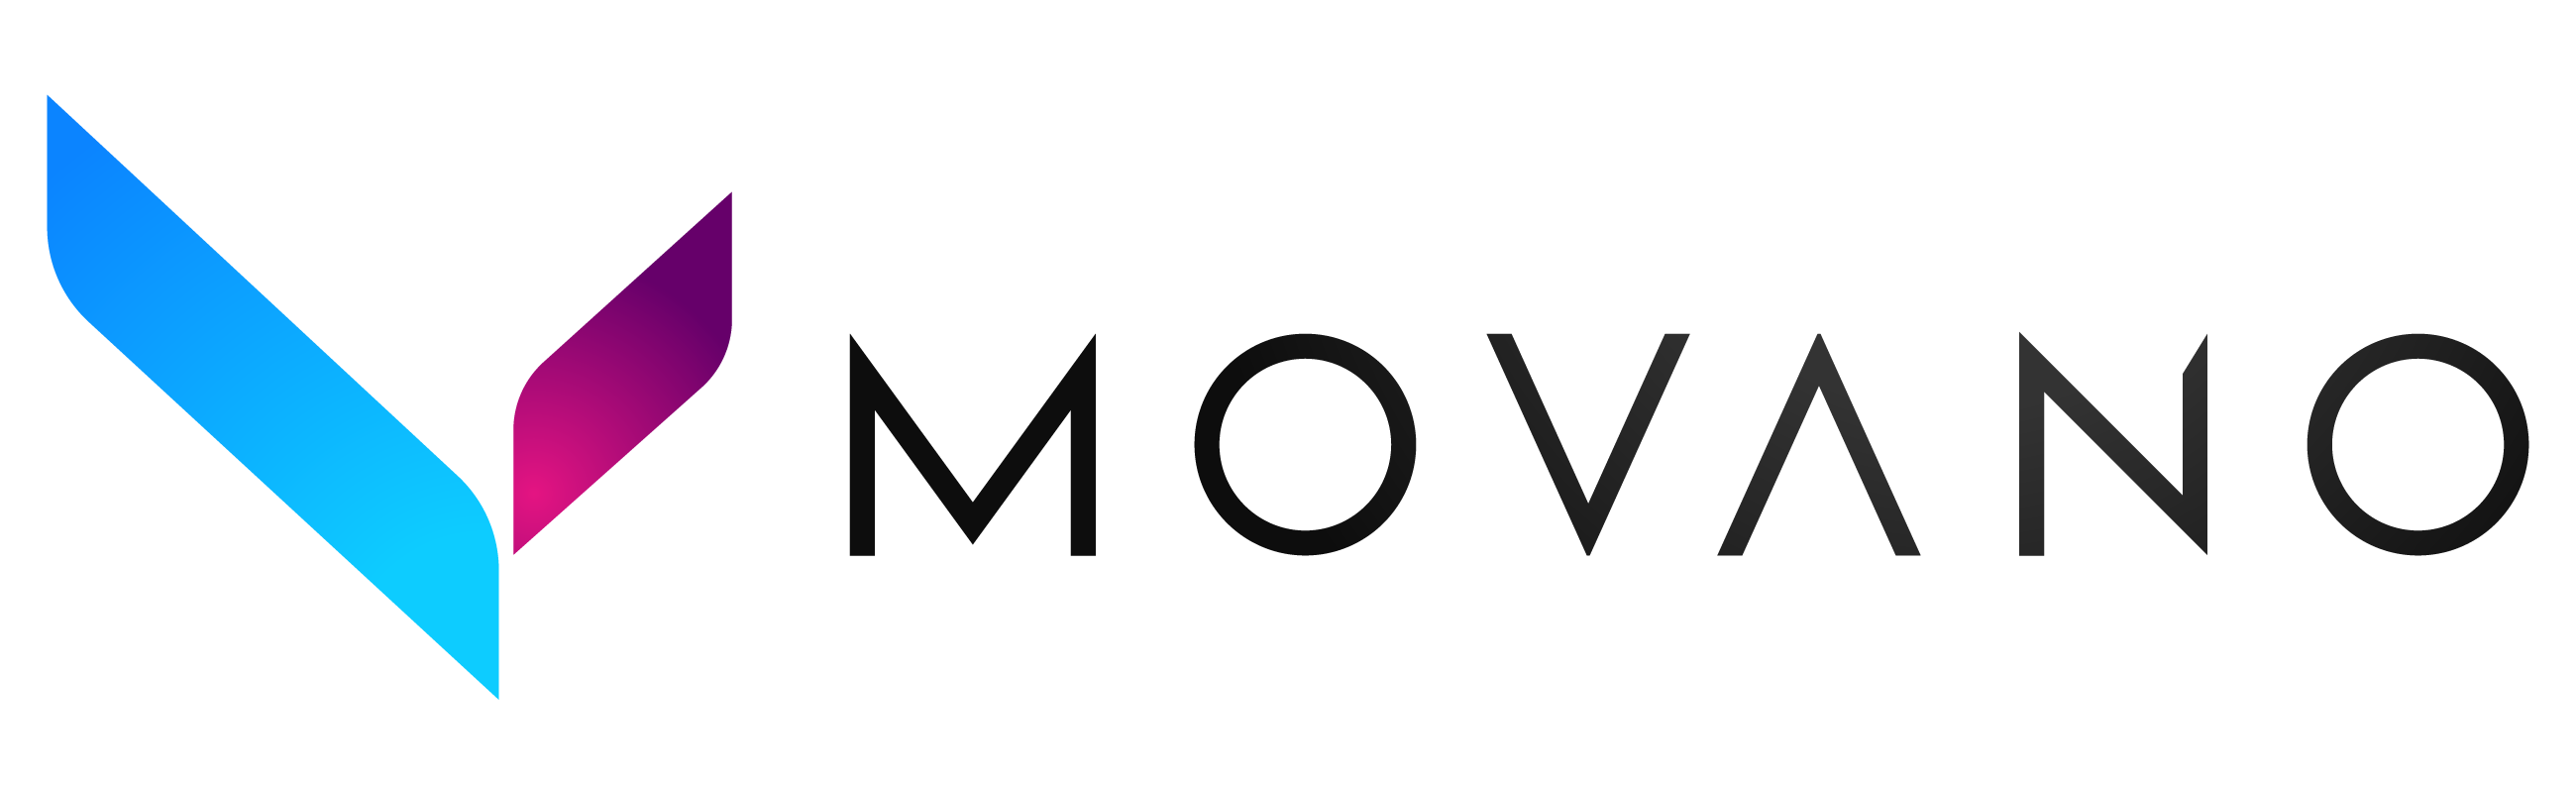 Movano, Inc. logo